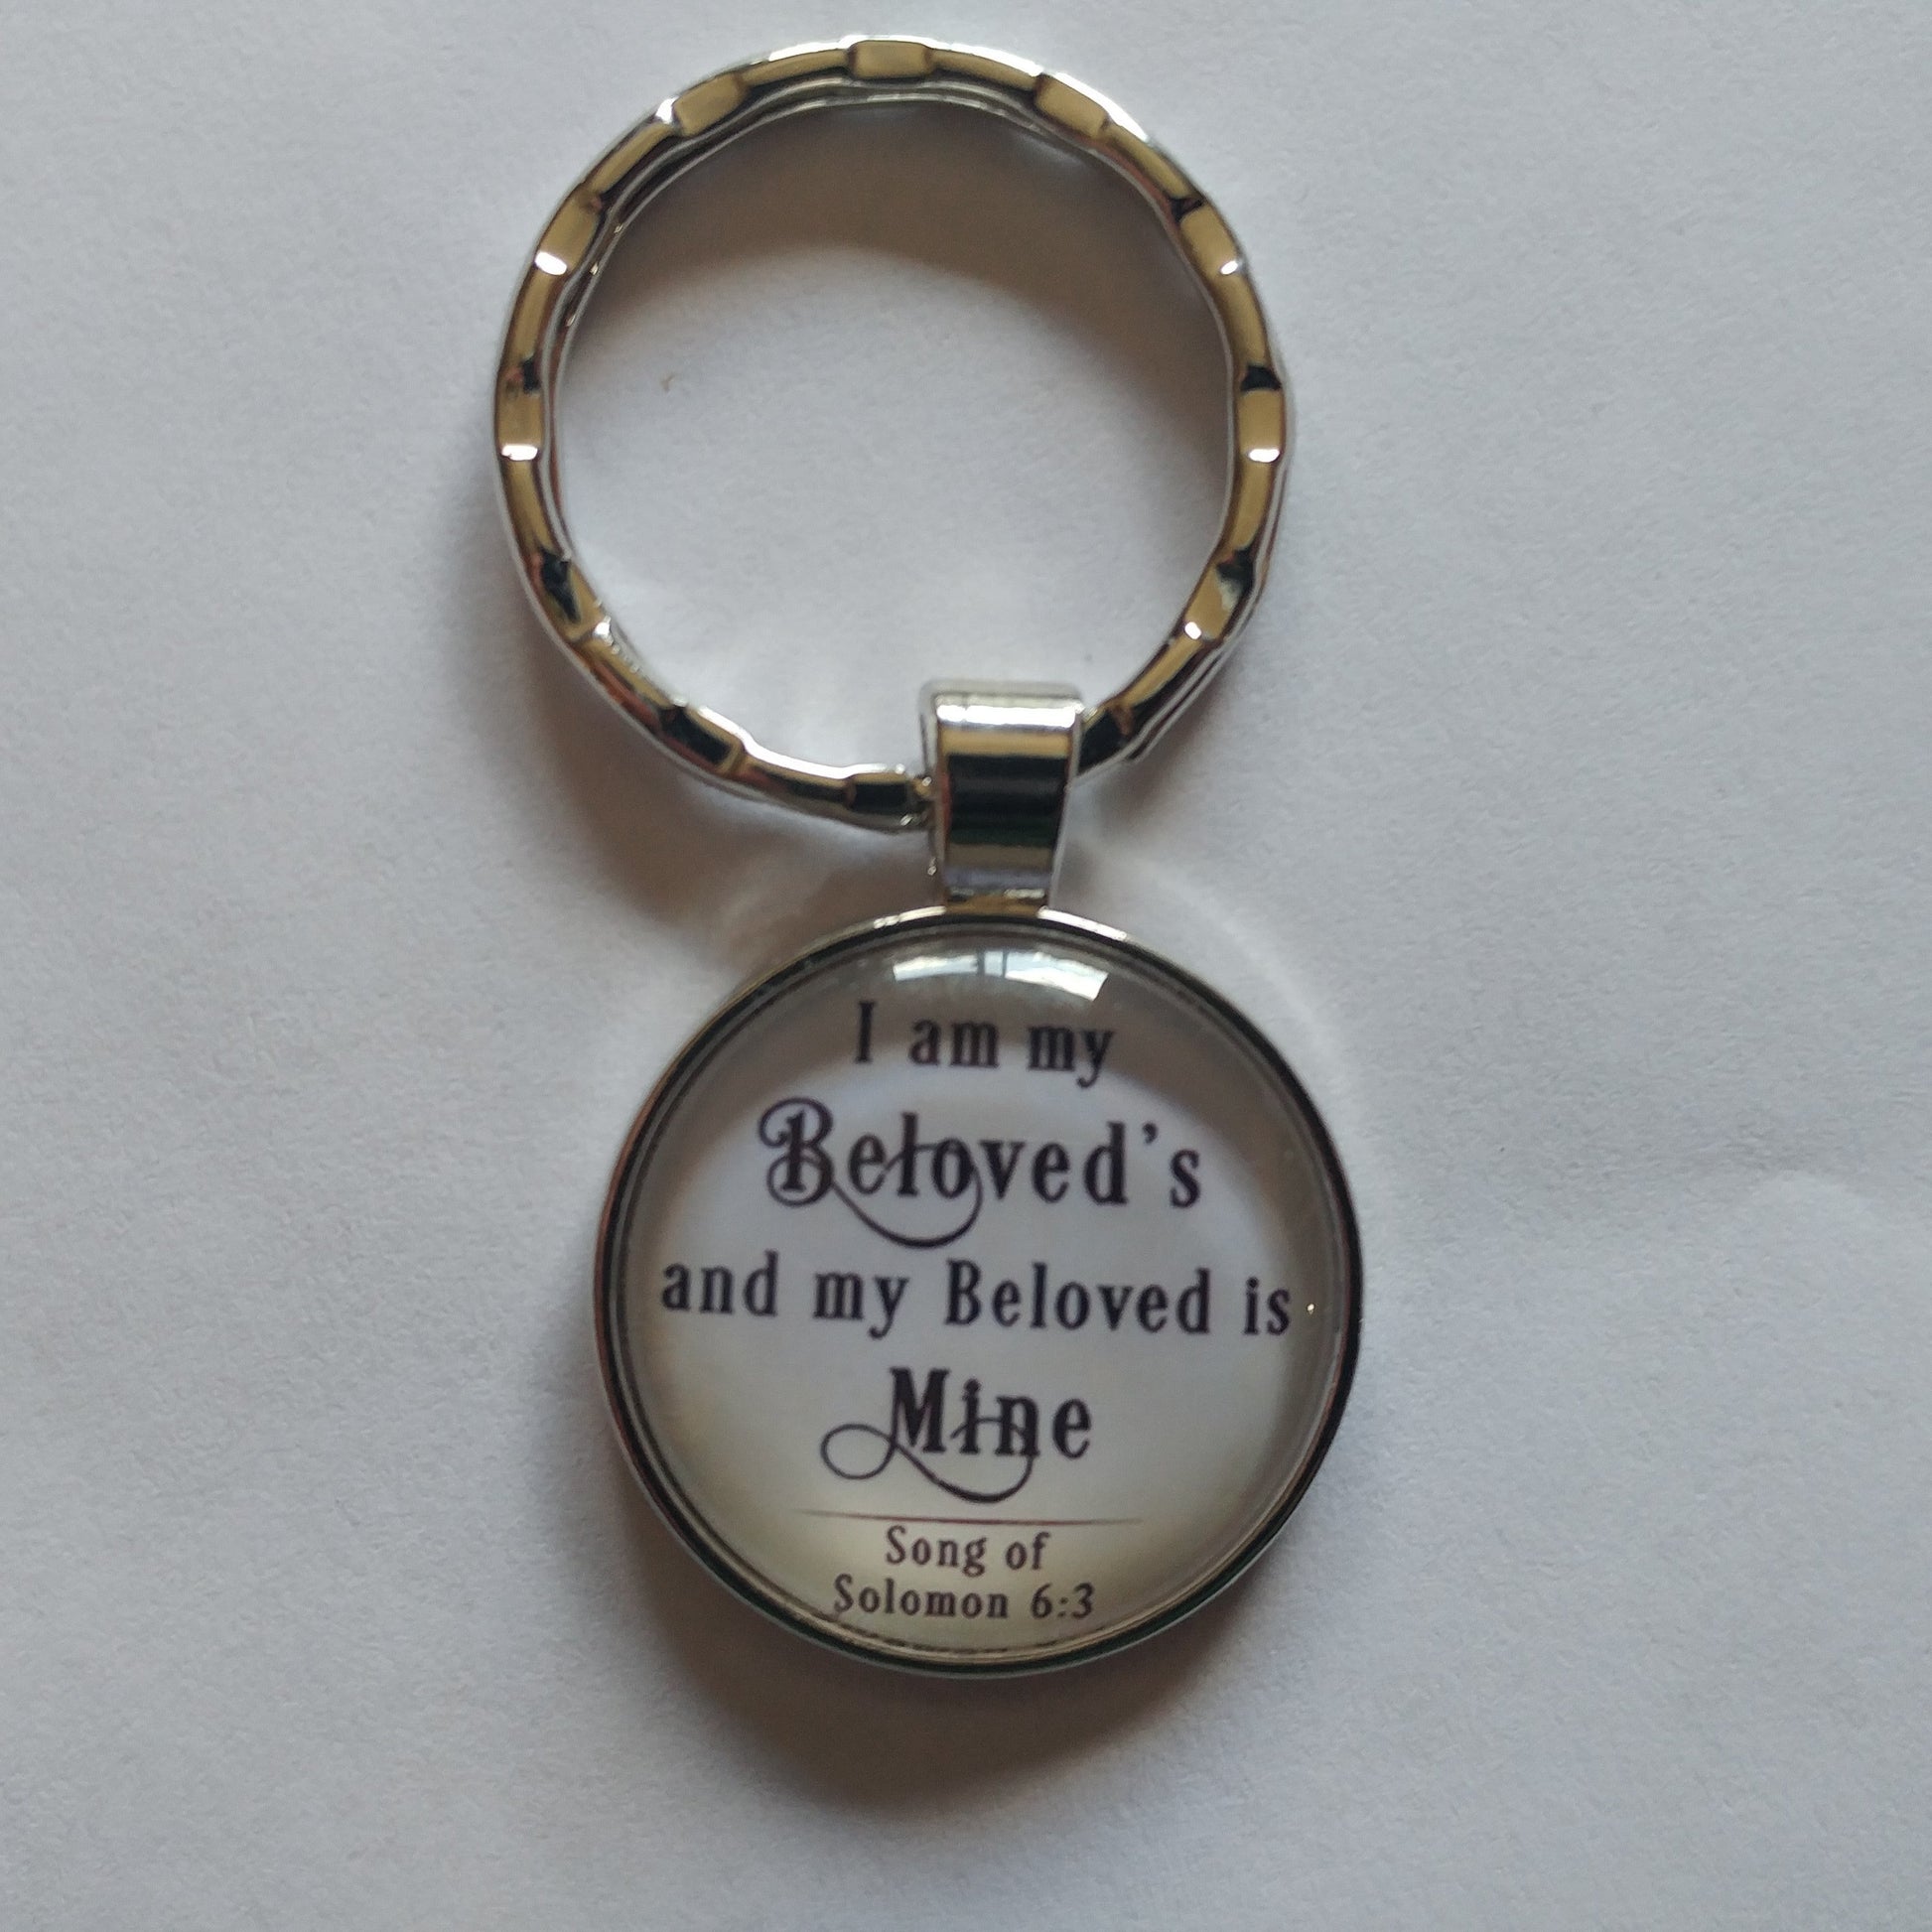 My beloved is mine - keychain - Rock of Israel Store